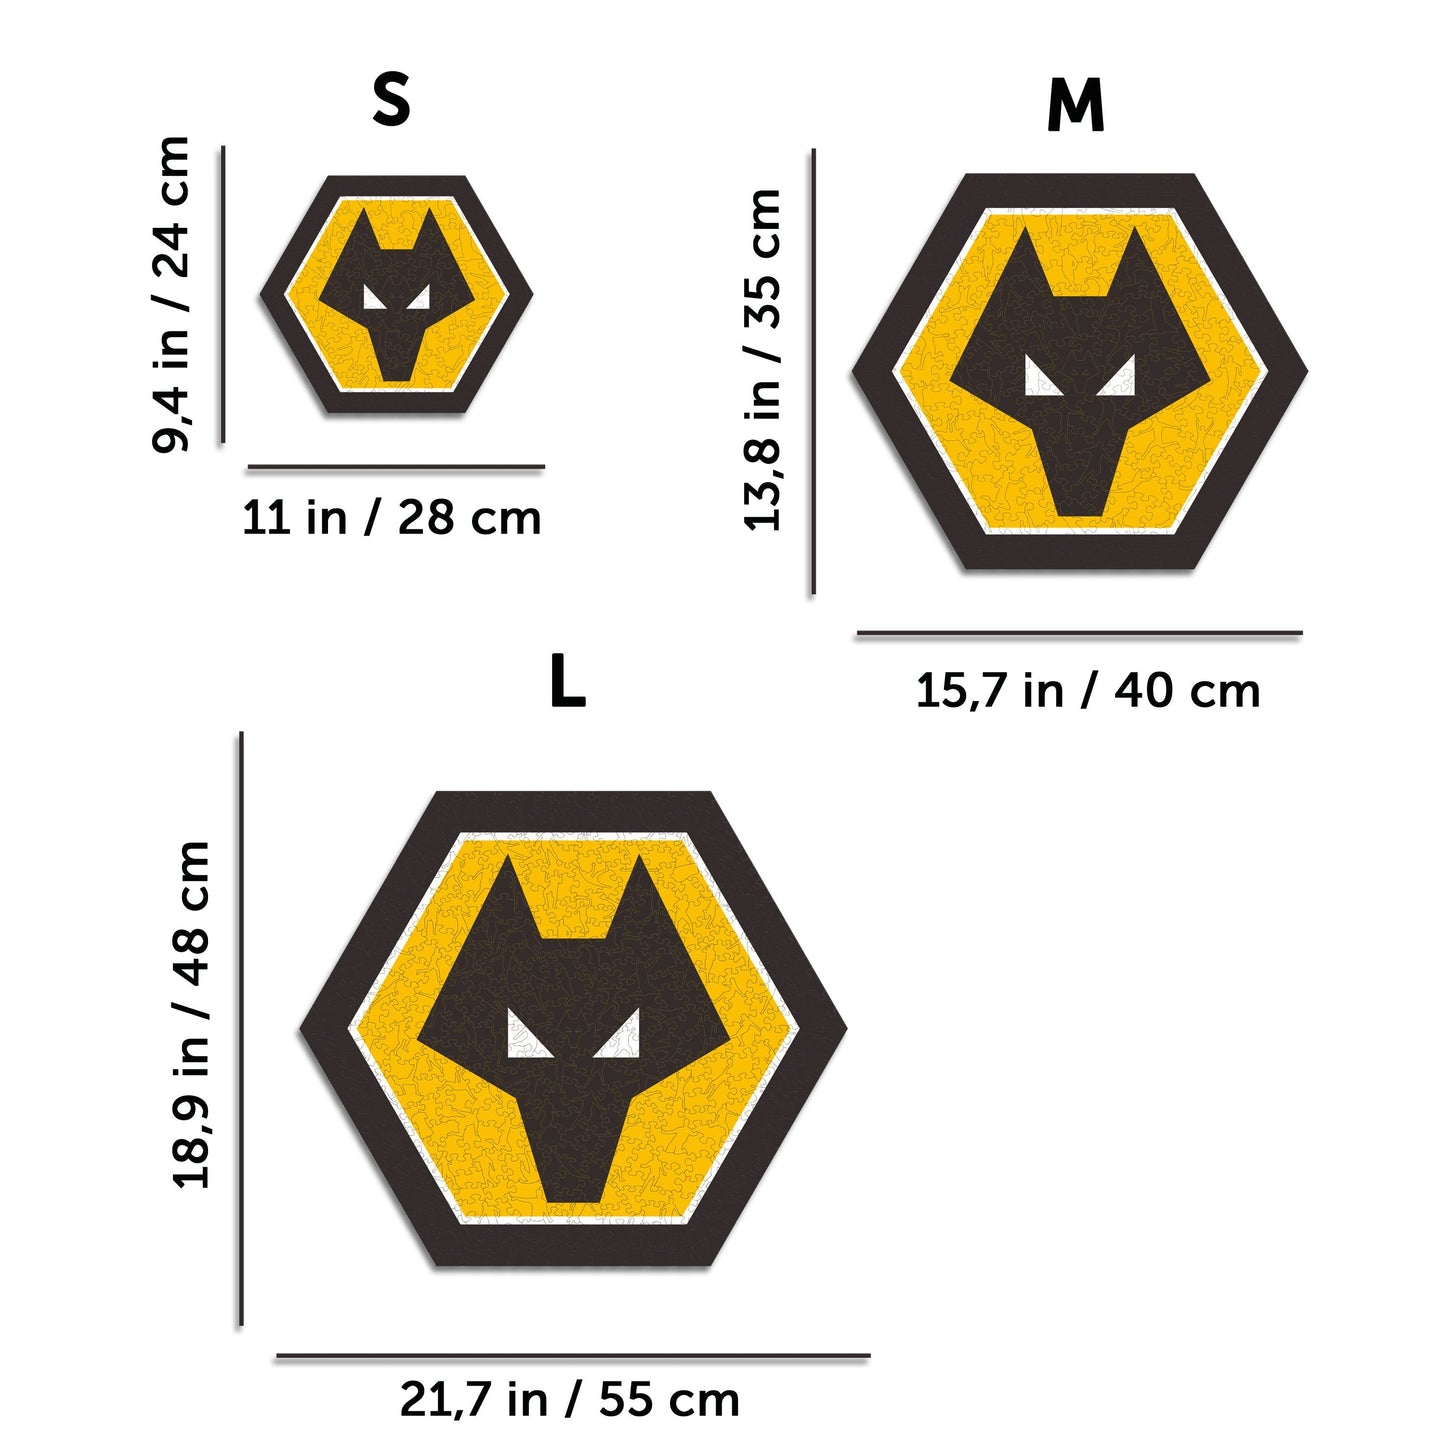 Wolves FC® Logo - Wooden Puzzle